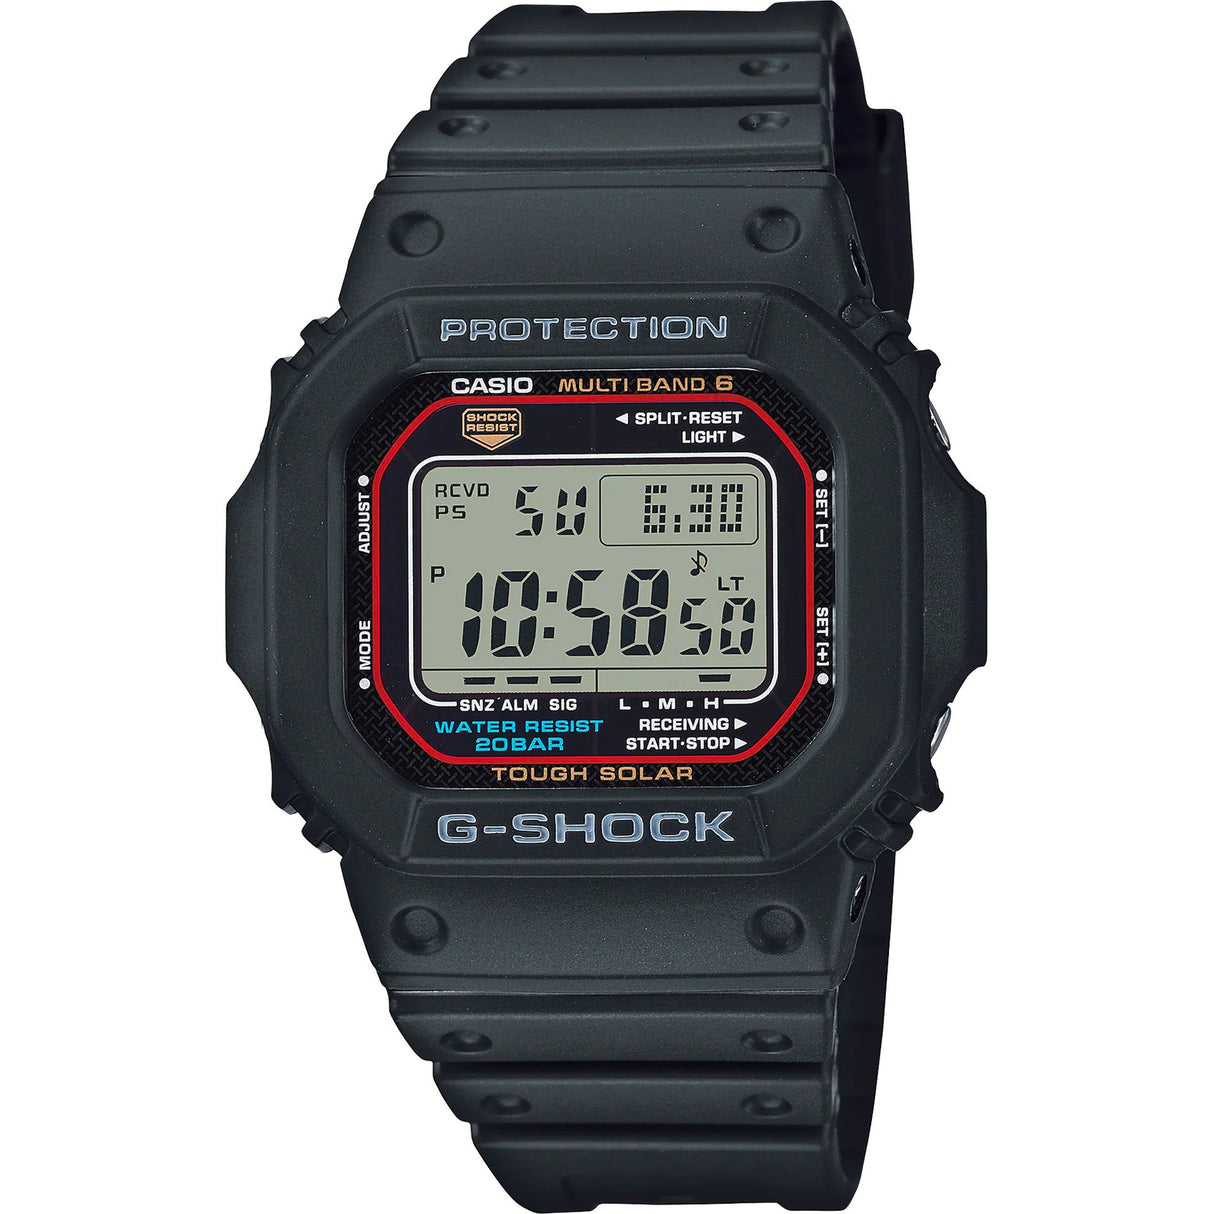 Men's watch Digital watch Sports watch Casual watch Everyday watch Comfortable watch Durable watch Water-resistant watch Gift watch Active watch